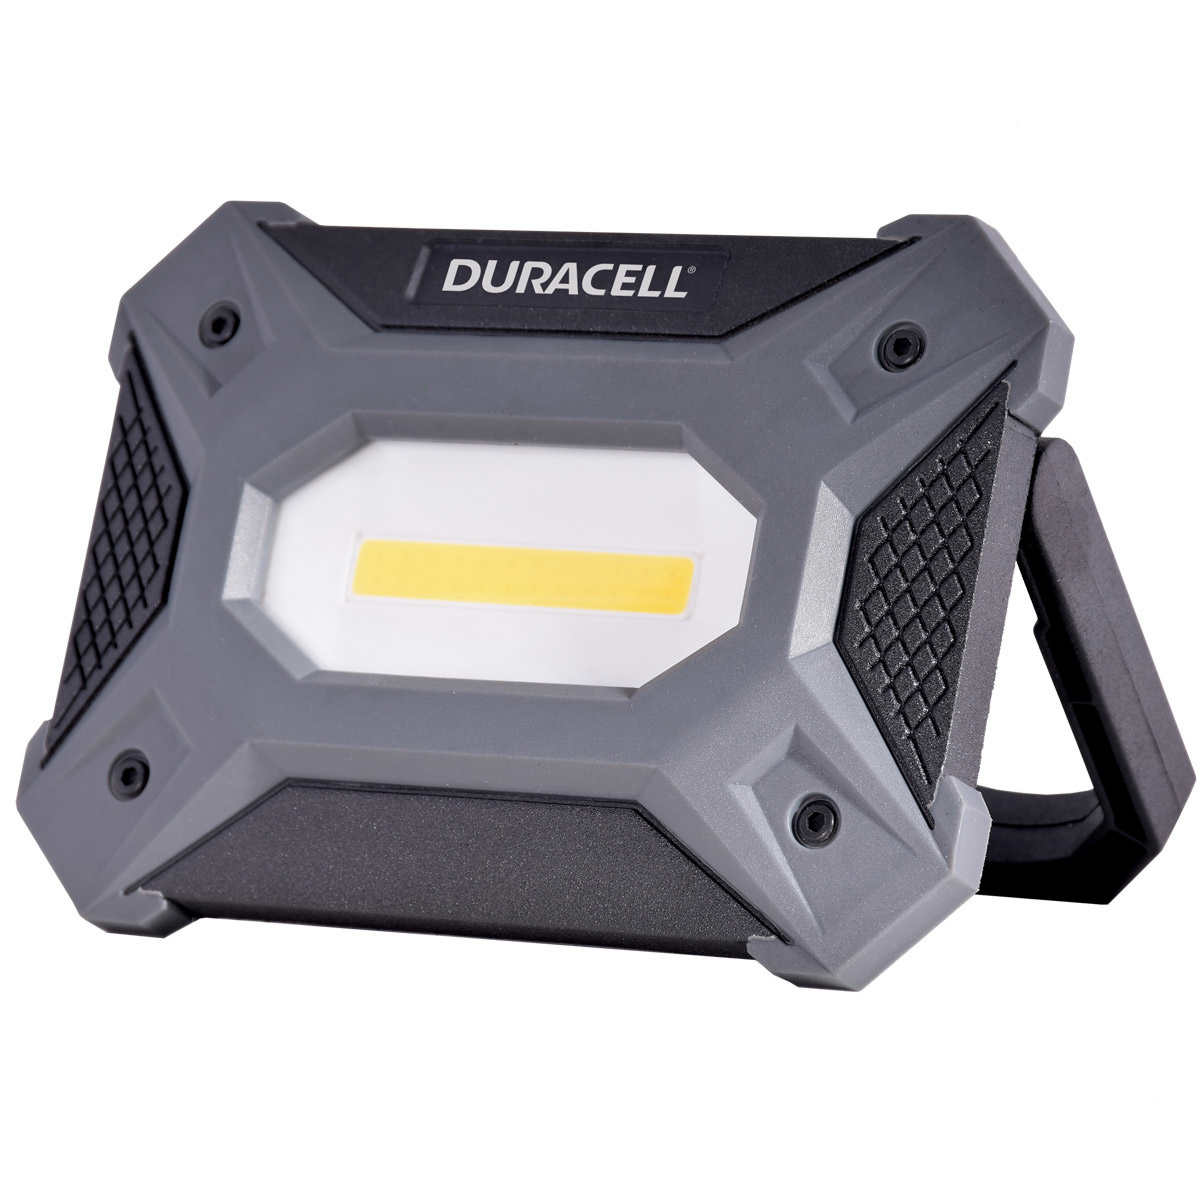 Duracell 500 Lumen Flex Power Floating LED Lantern with 360° Lighting